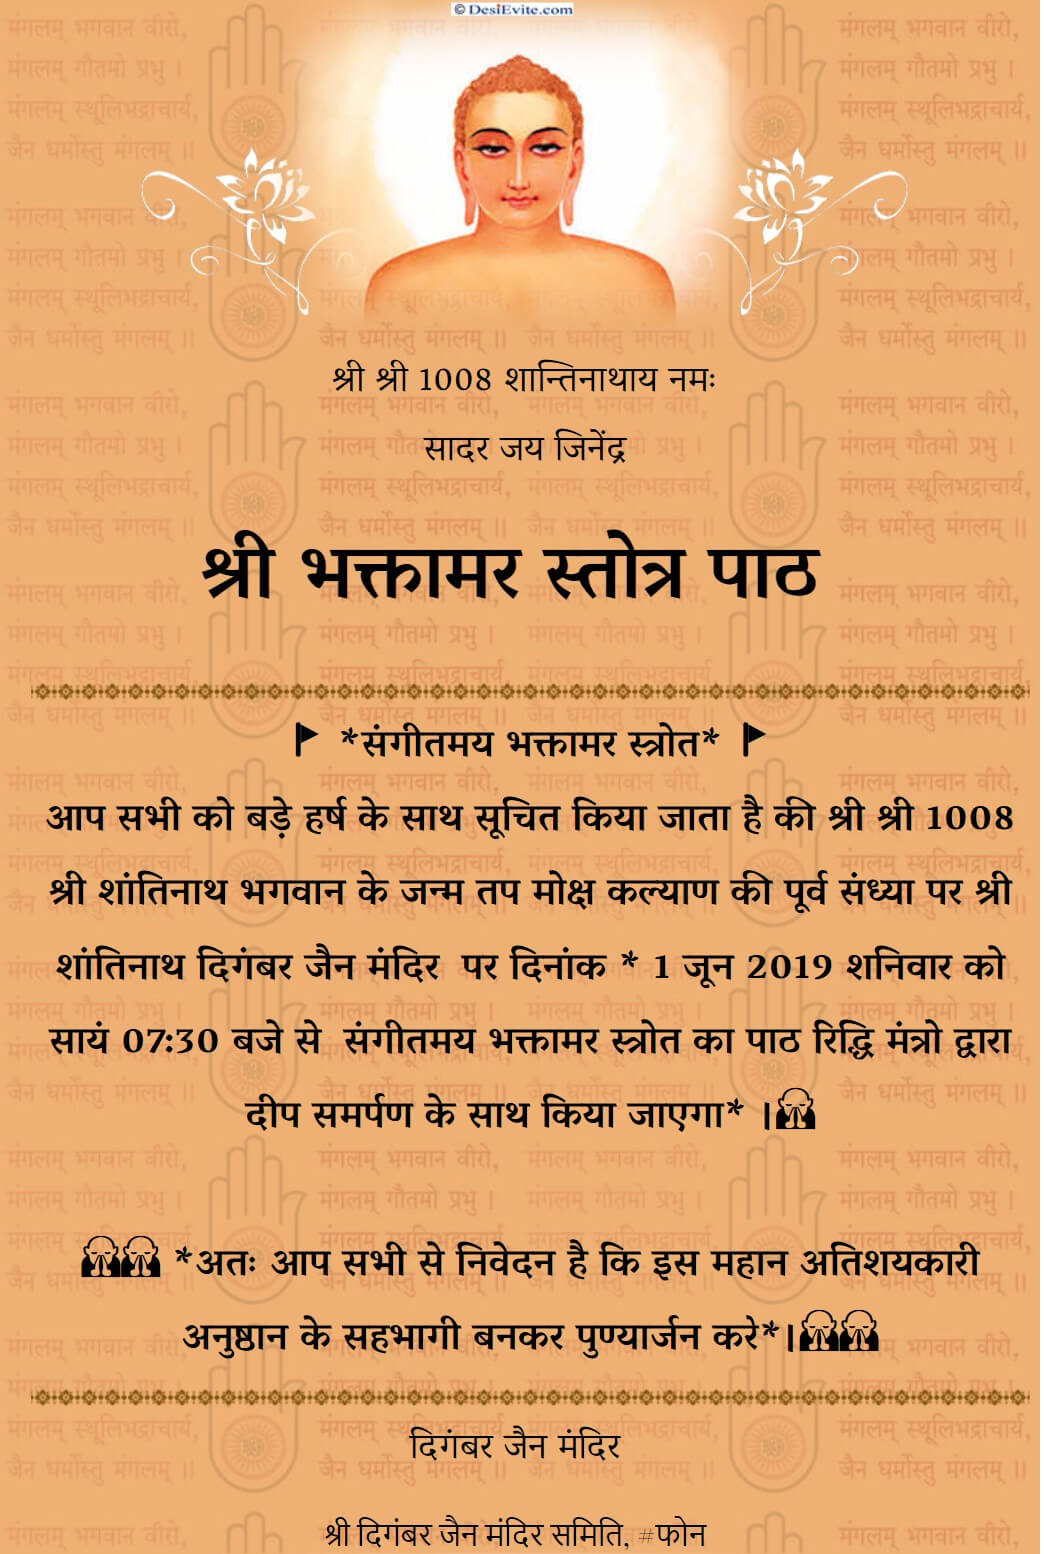 mahavir jayanti invitation in hindi 61 